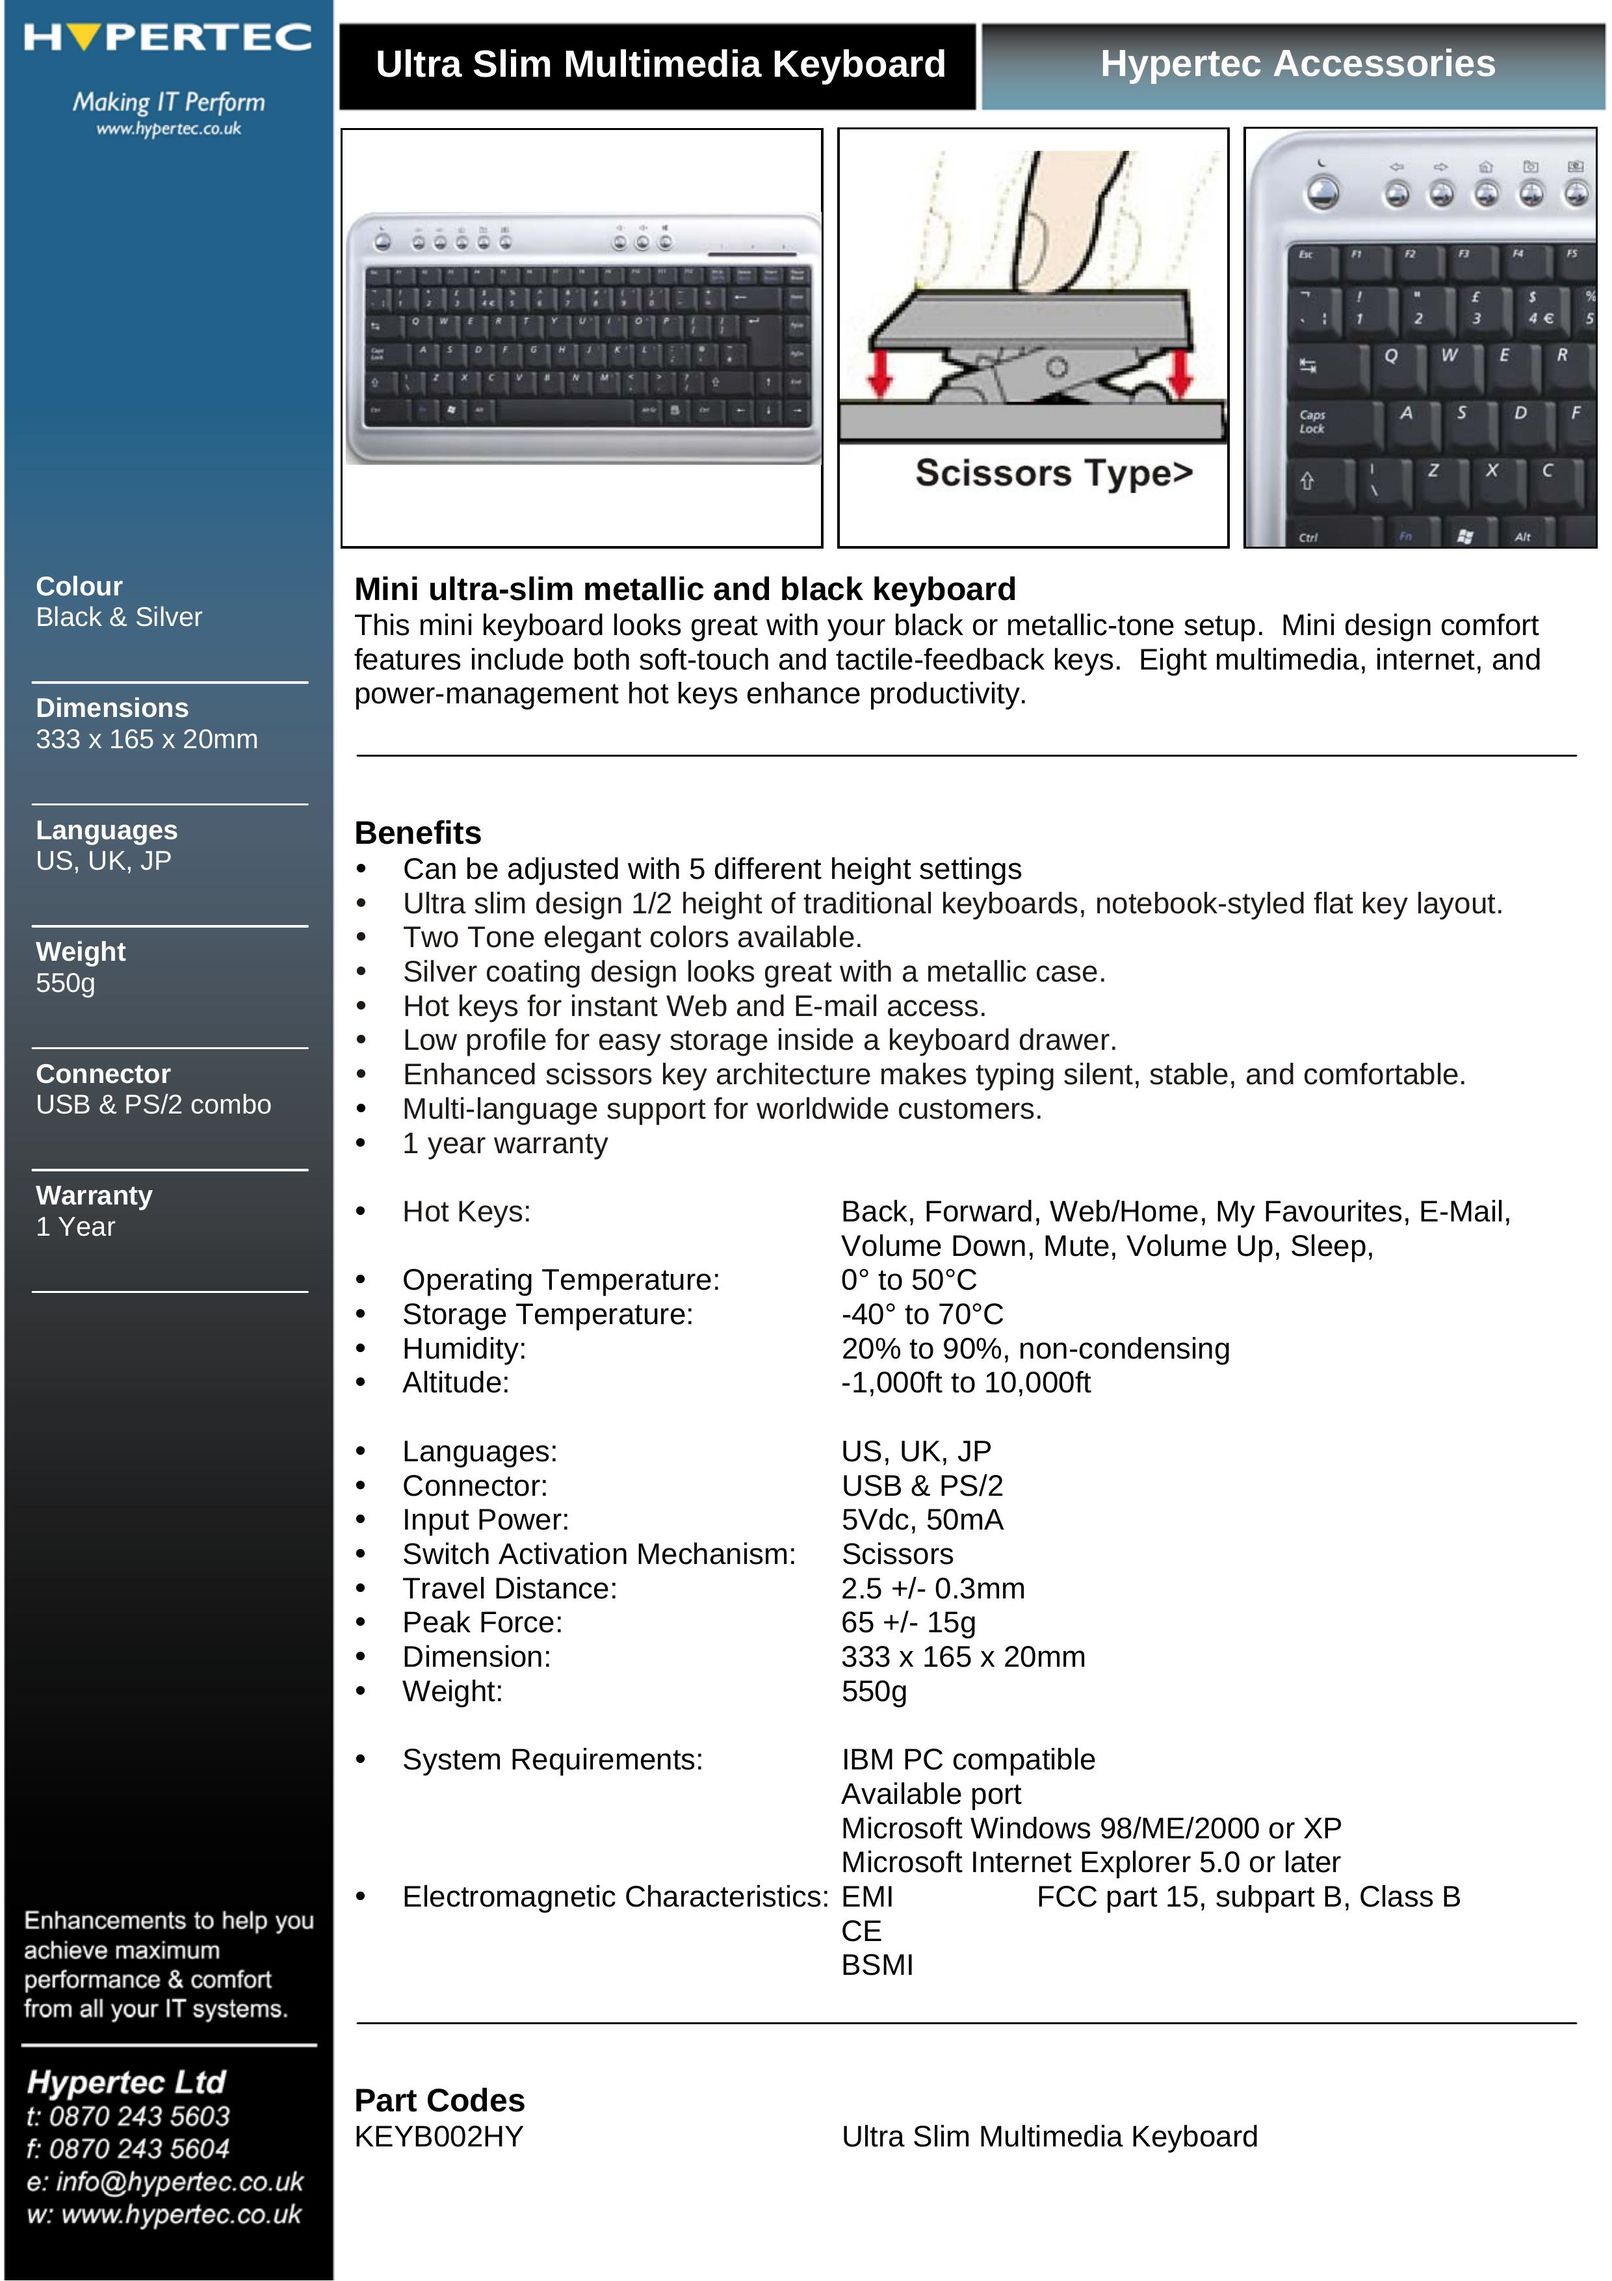 Hypertec KEYB002HY Mouse User Manual